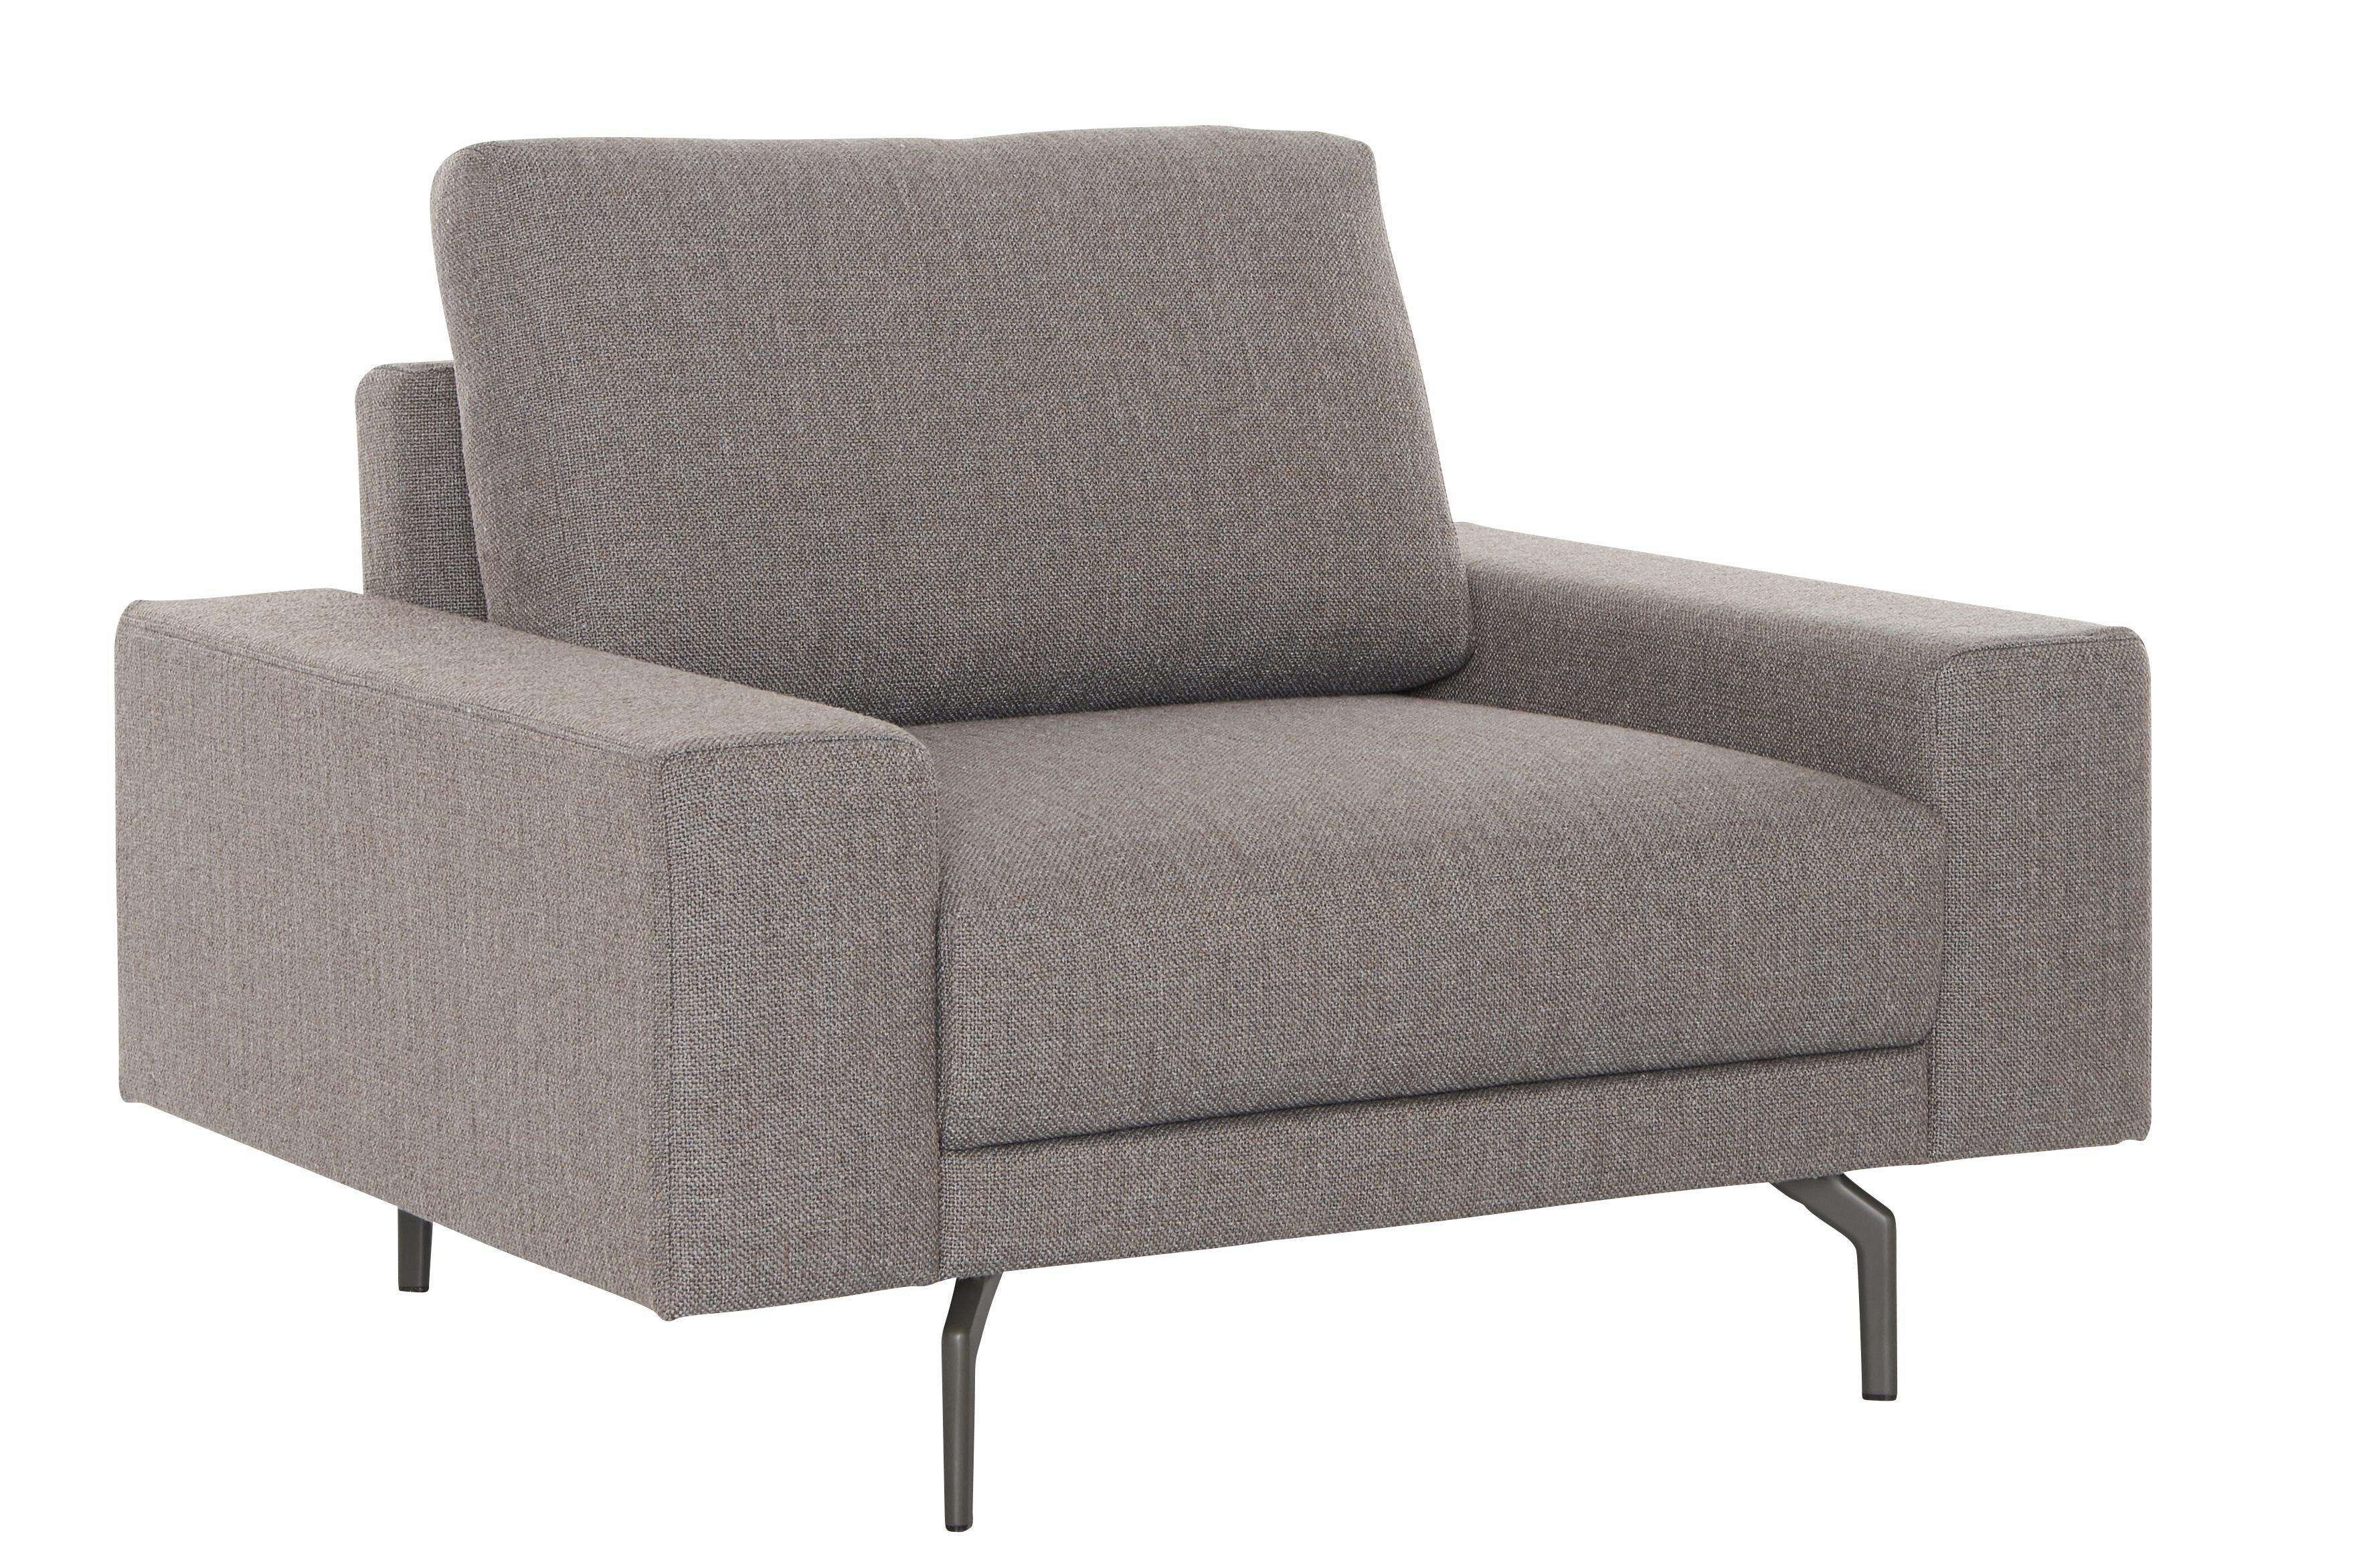 hülsta sofa Sessel hs.450, 120 cm in Breite Alugussfüße Armlehne breit umbragrau, niedrig